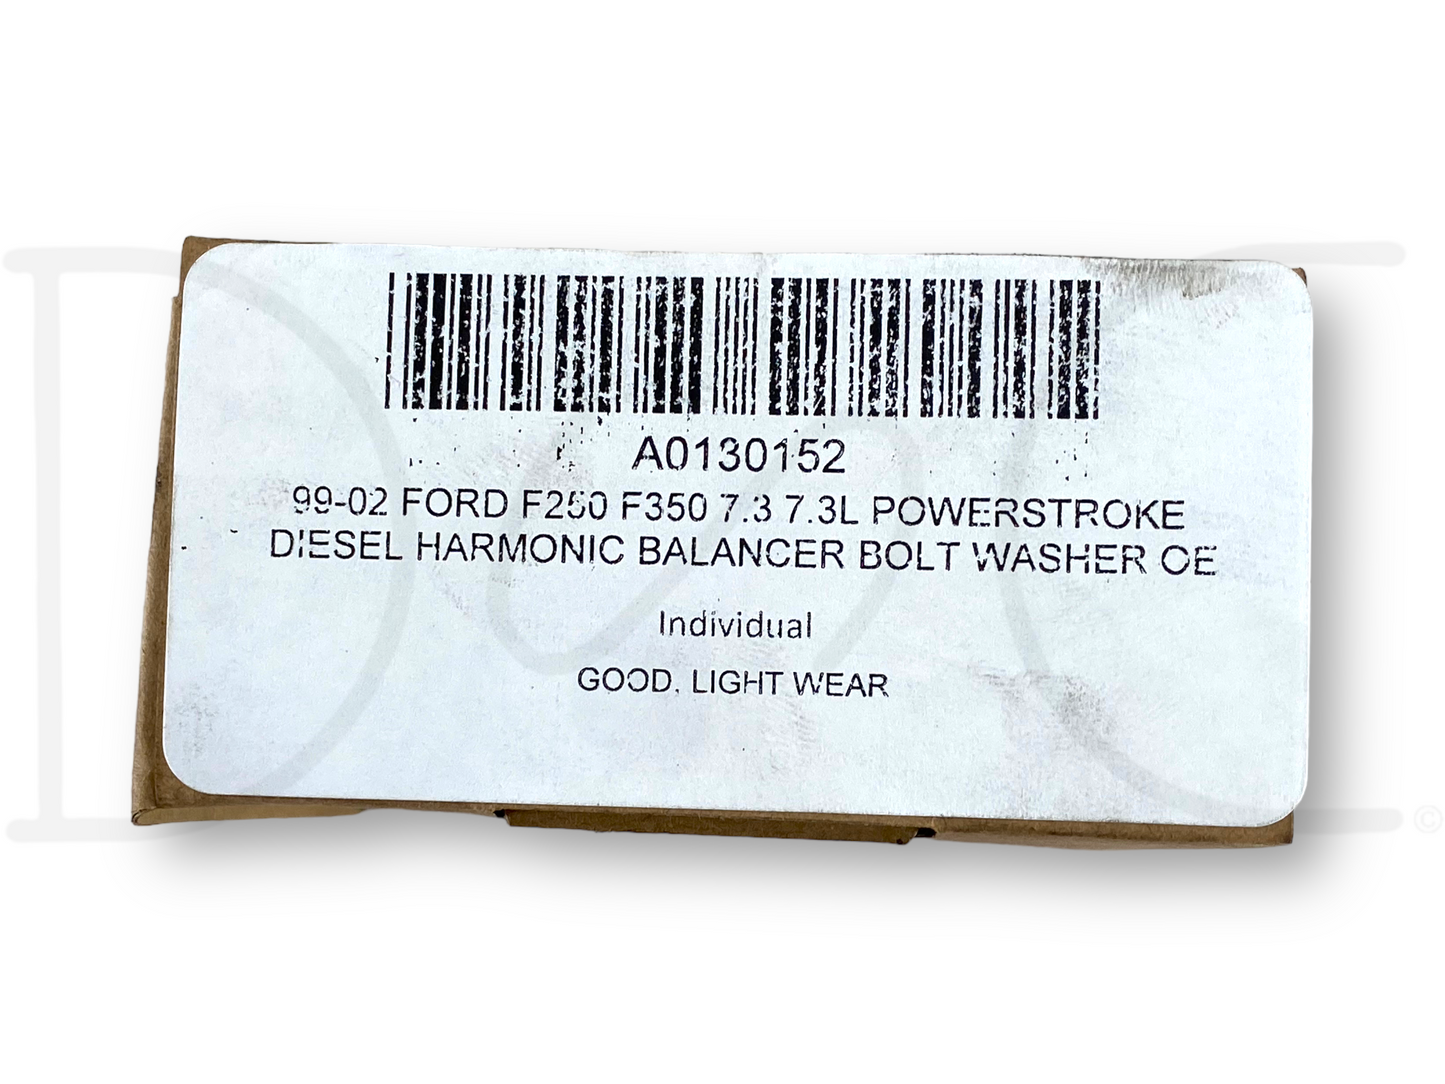 99-02 Ford F250 F350 7.3 7.3L Powerstroke Diesel Harmonic Balancer Bolt Washer OE